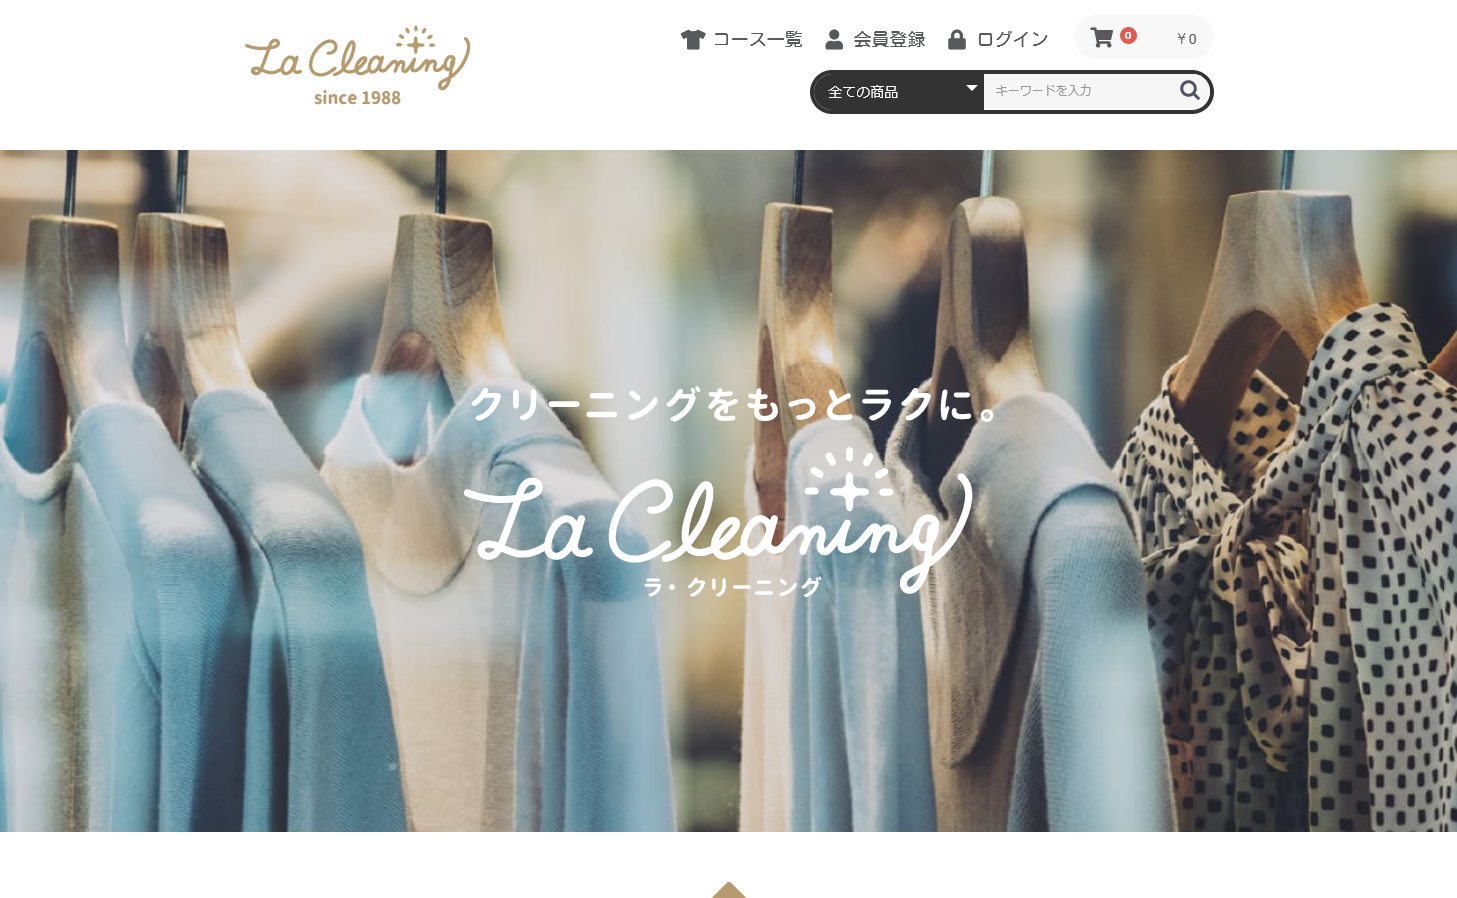 La cleaning-ラ・クリー二ング